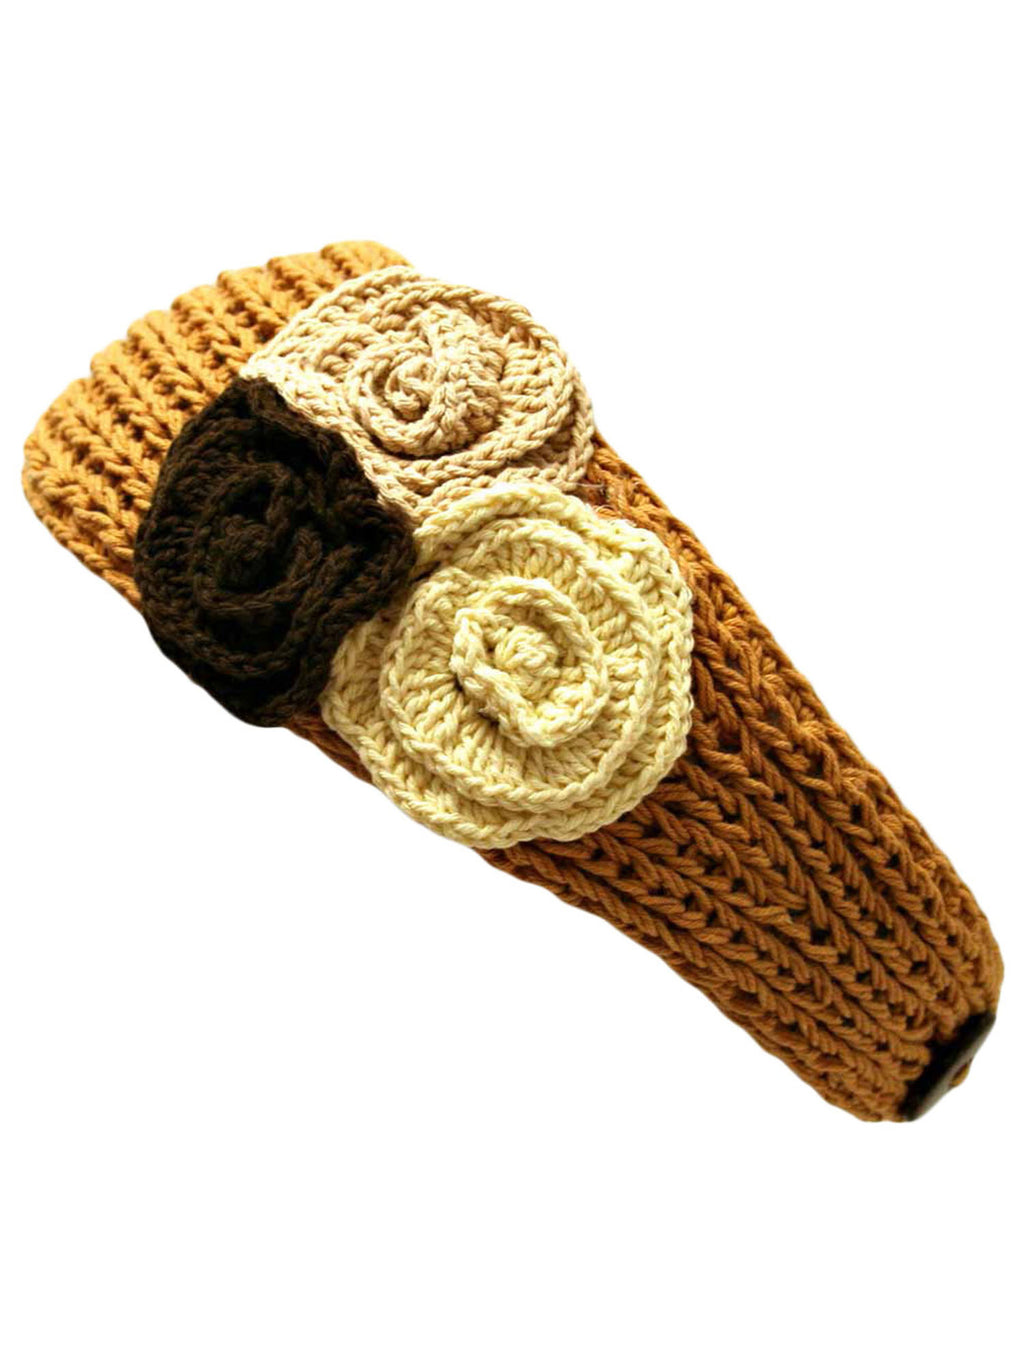 Crochet Headband With Three Knit Flowers